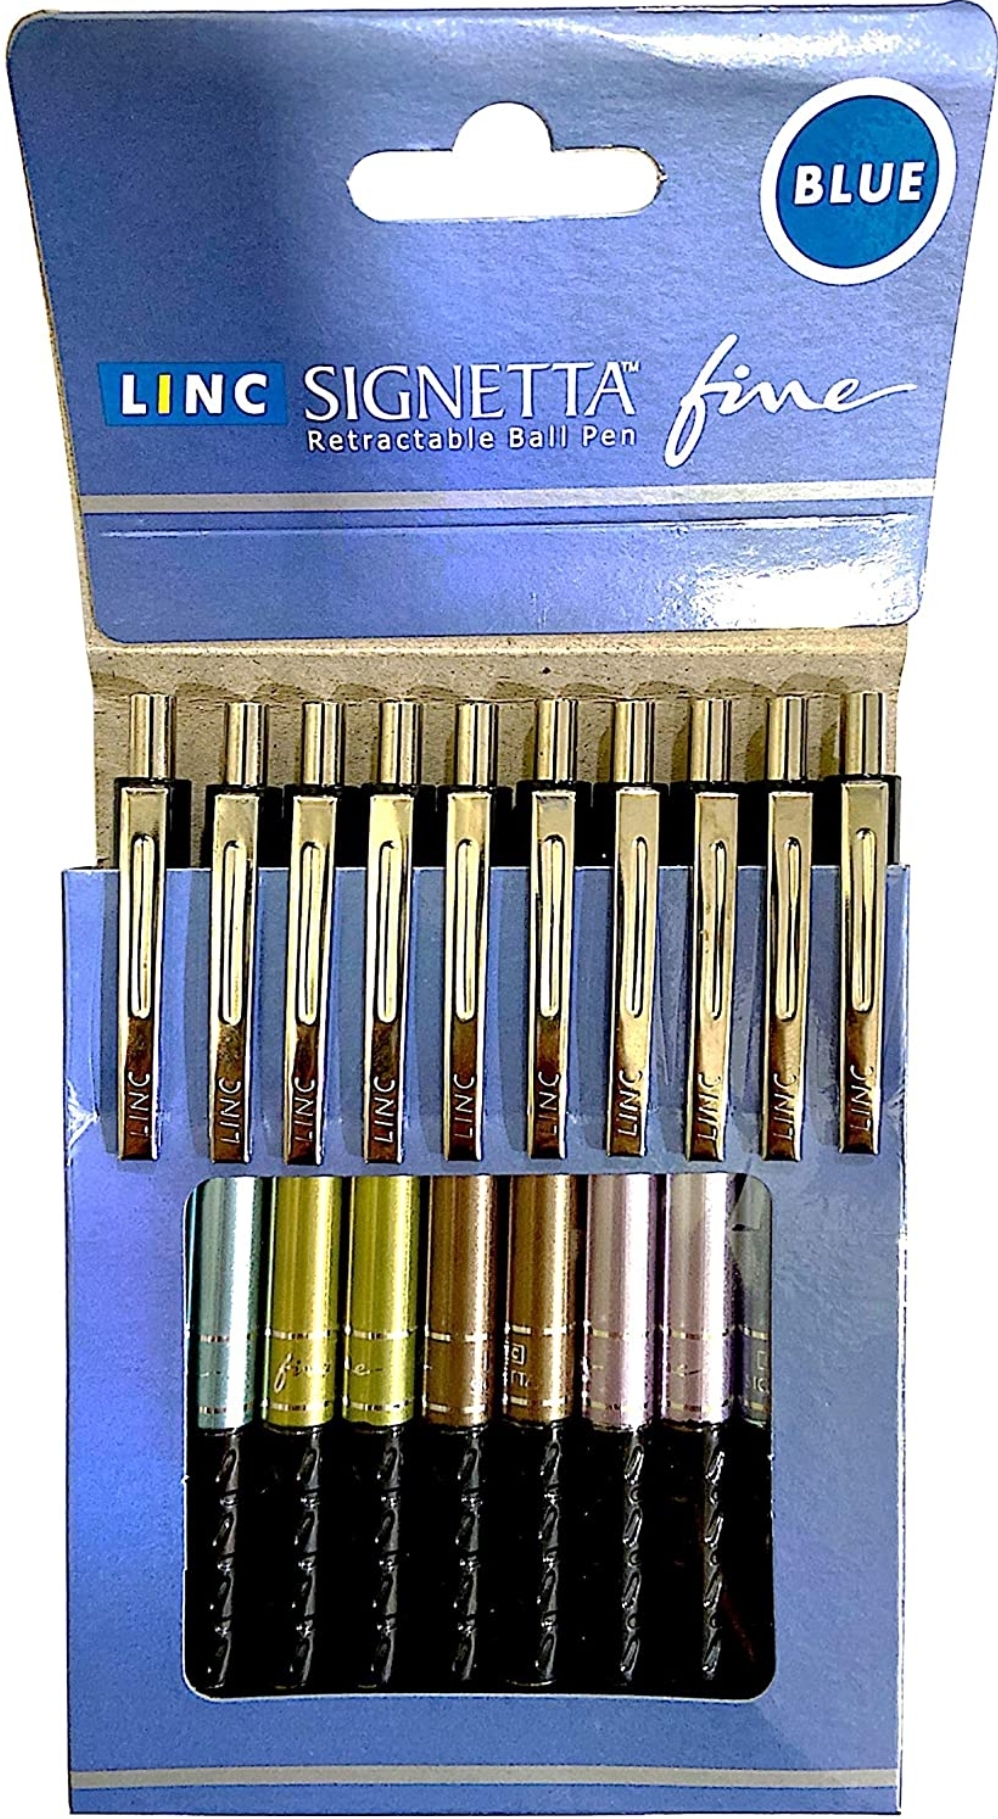 Linc Signetta Fine Ball Pen 0.7mm, Blue Pen, Retractable Pen Pack of 10 Pen